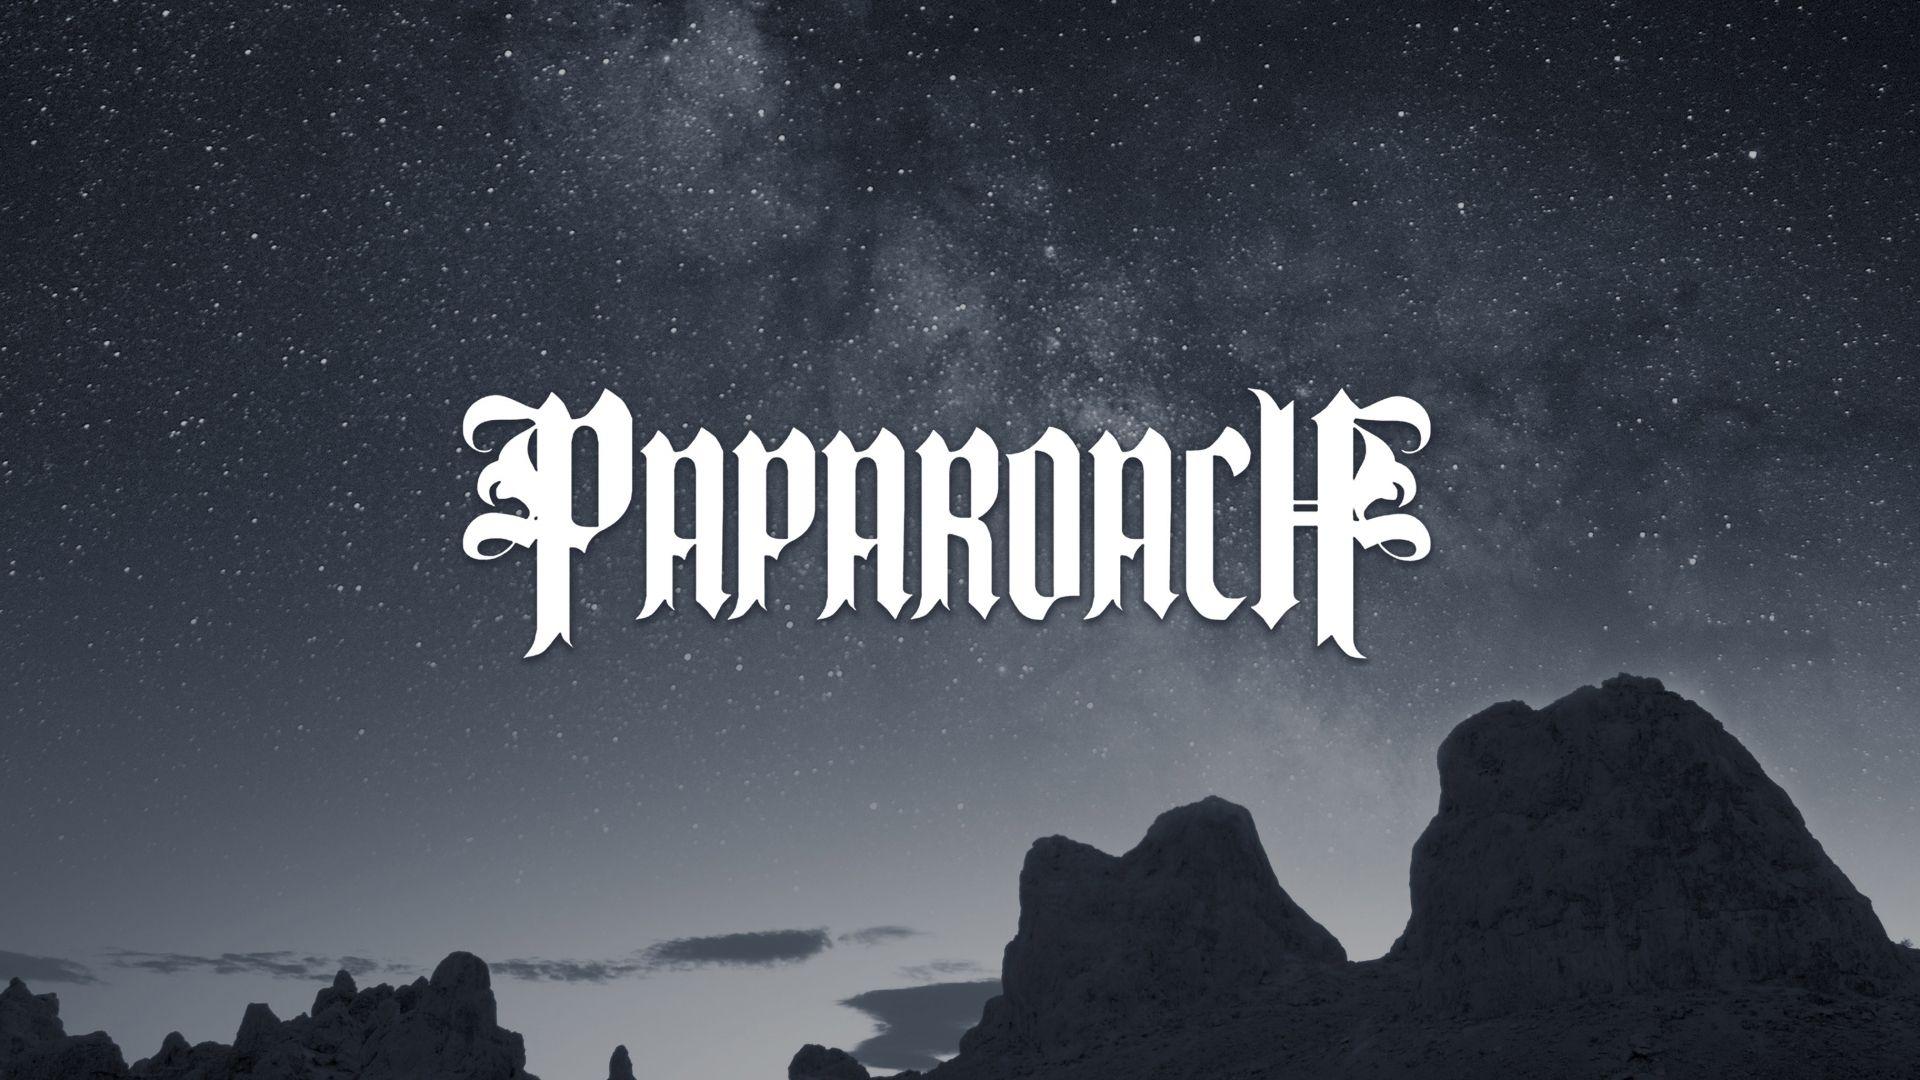 Papa roach leave. Papa Roach 1993. Papa Roach логотип группы. Папа Роуч лого. Группа папа Роуч обложки.